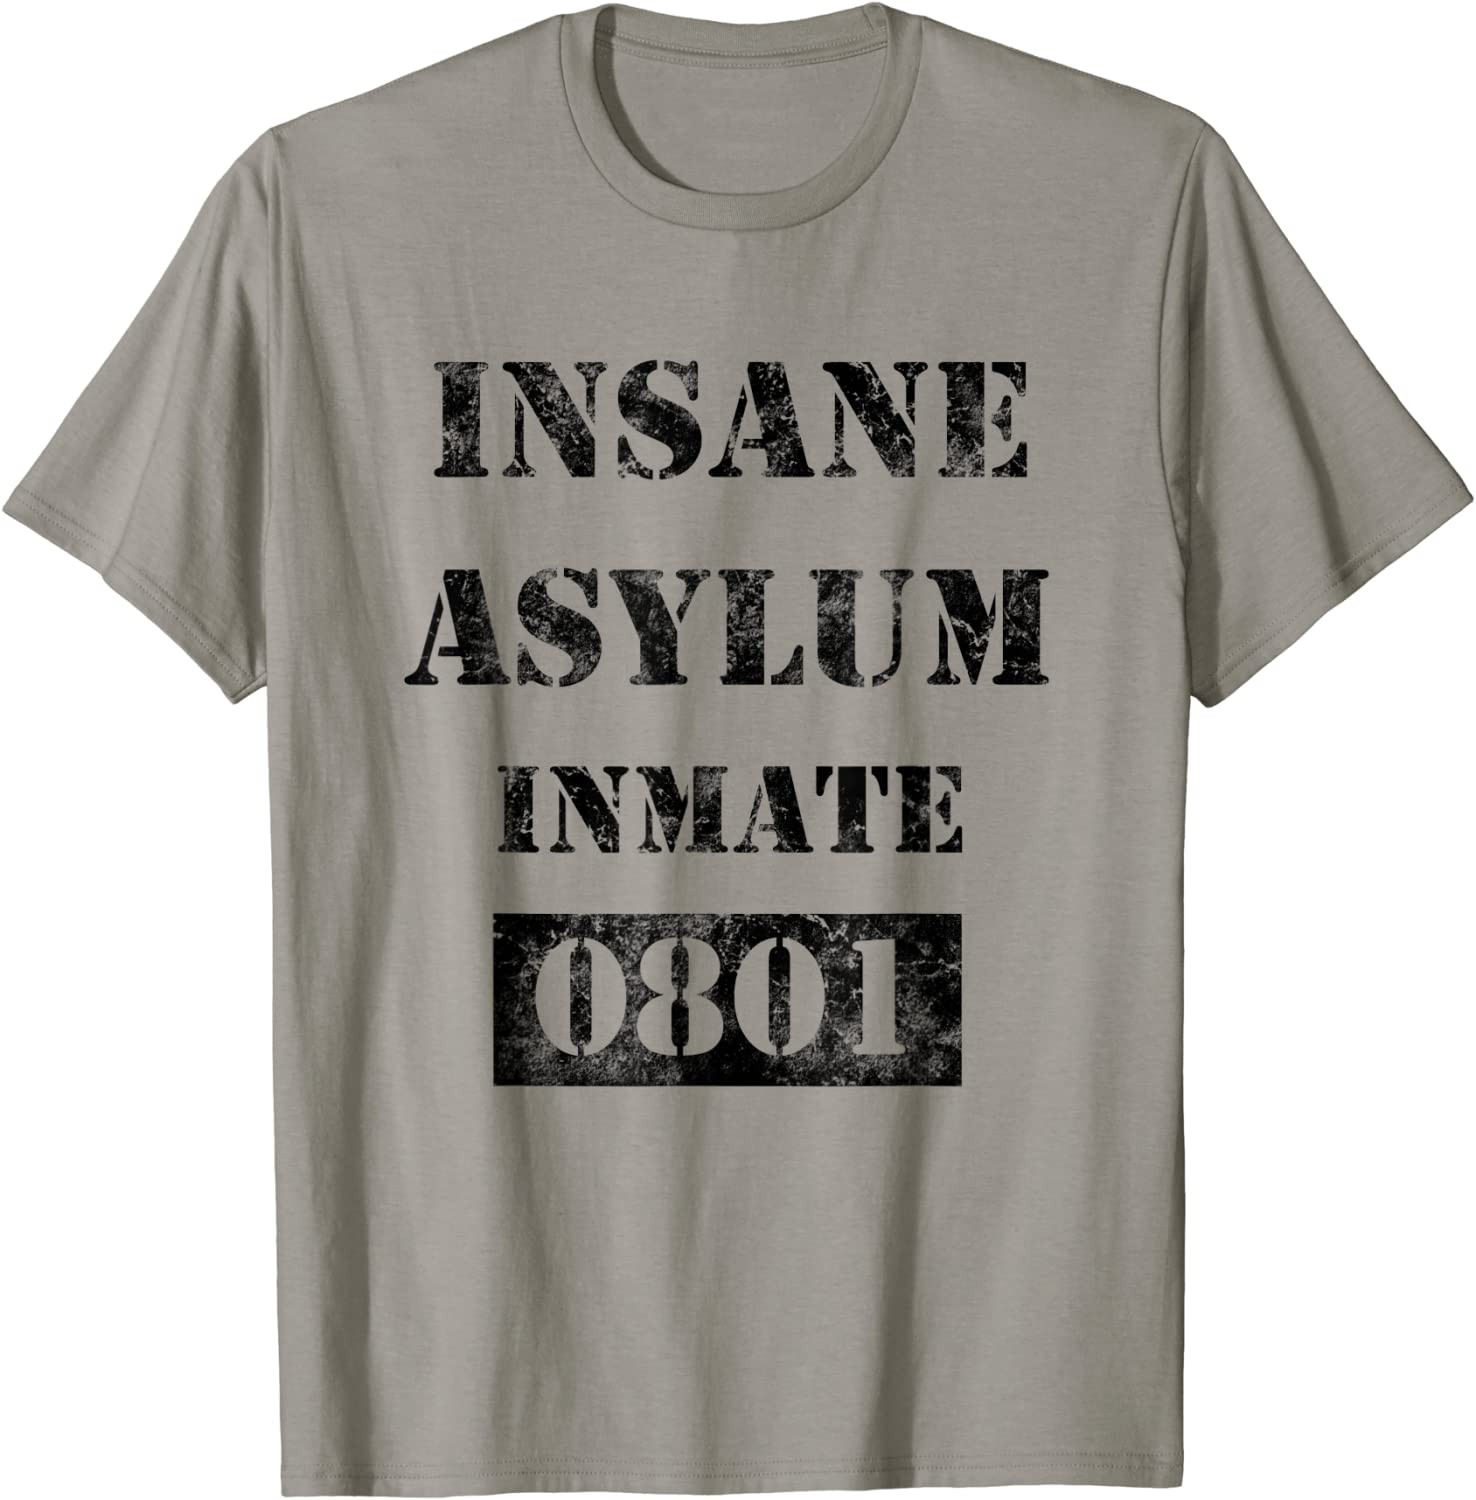 Funny Halloween Prison Costume Insane Asylum Blk Distressed T-Shirt